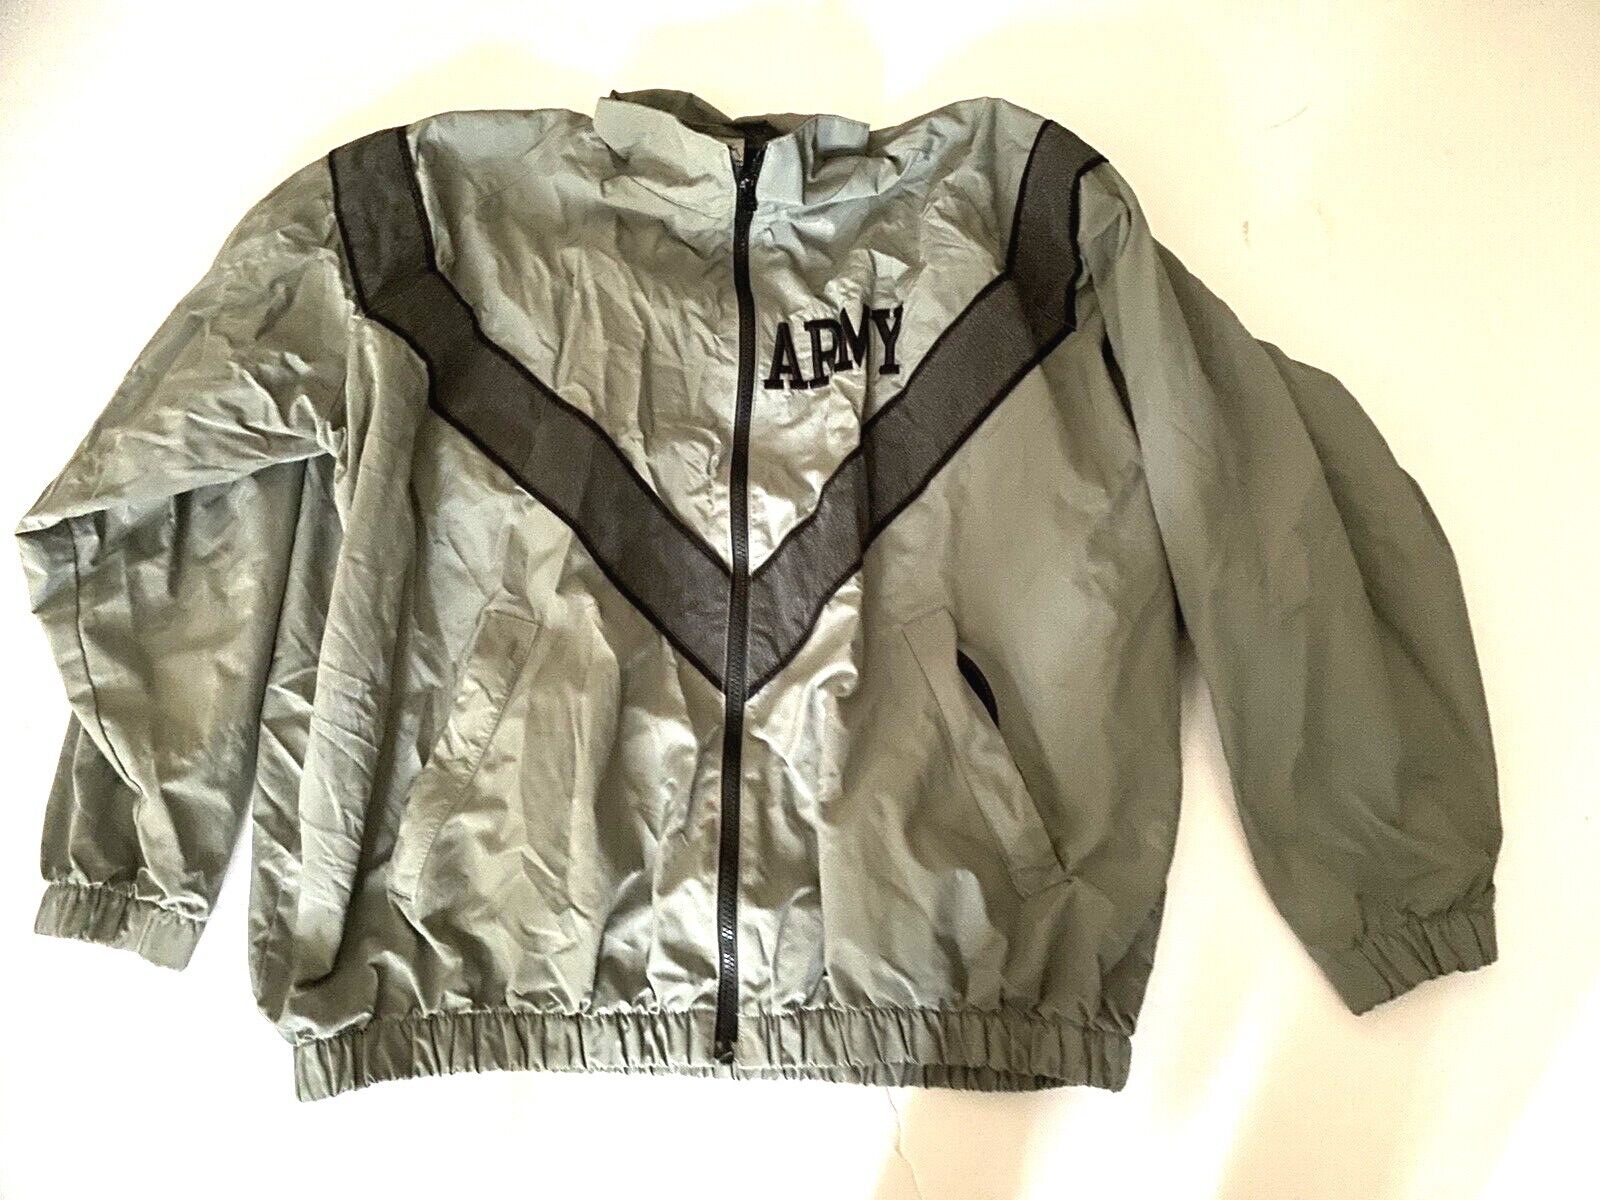 US Army Military Gray Reflective IPFU Physical Fitness Jacket Size Medium Reg 